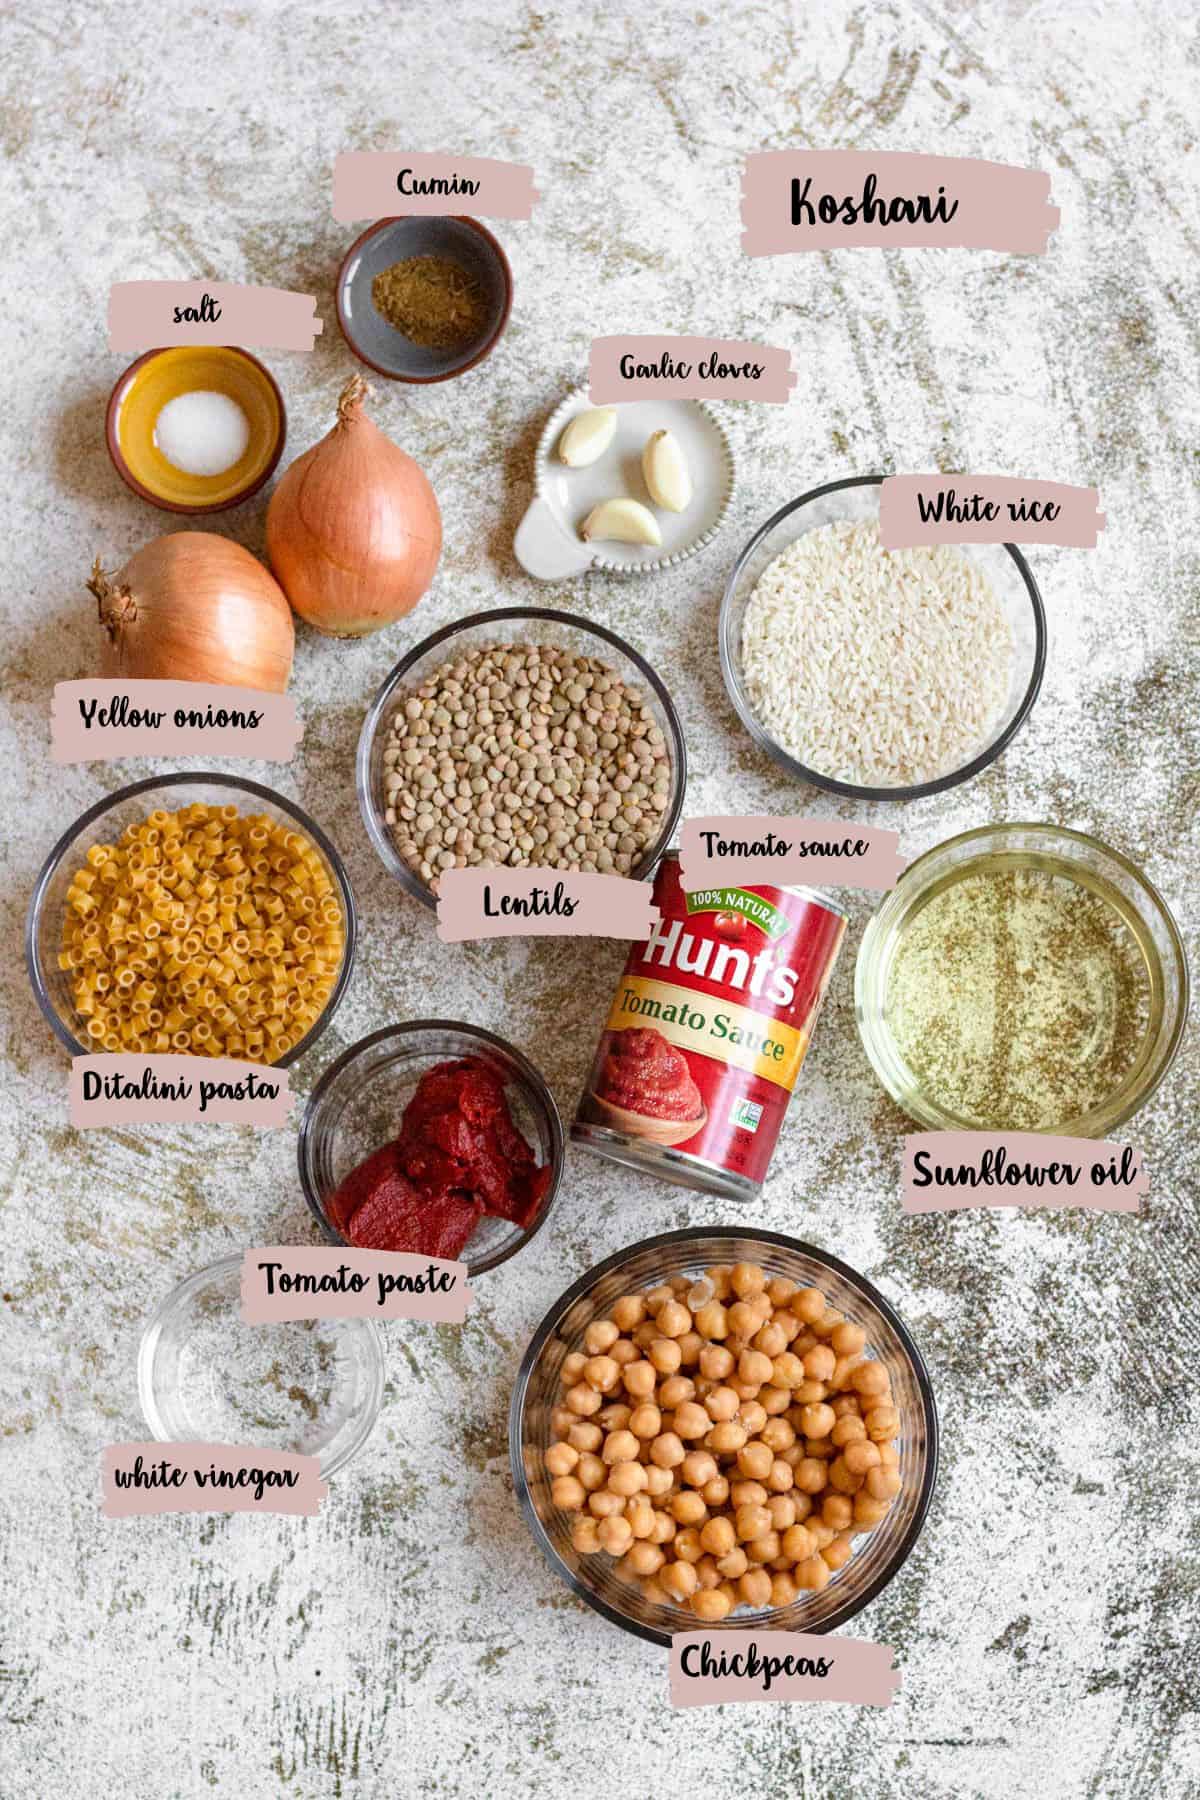 Ingredients shown that are used to prepare Koshari. 